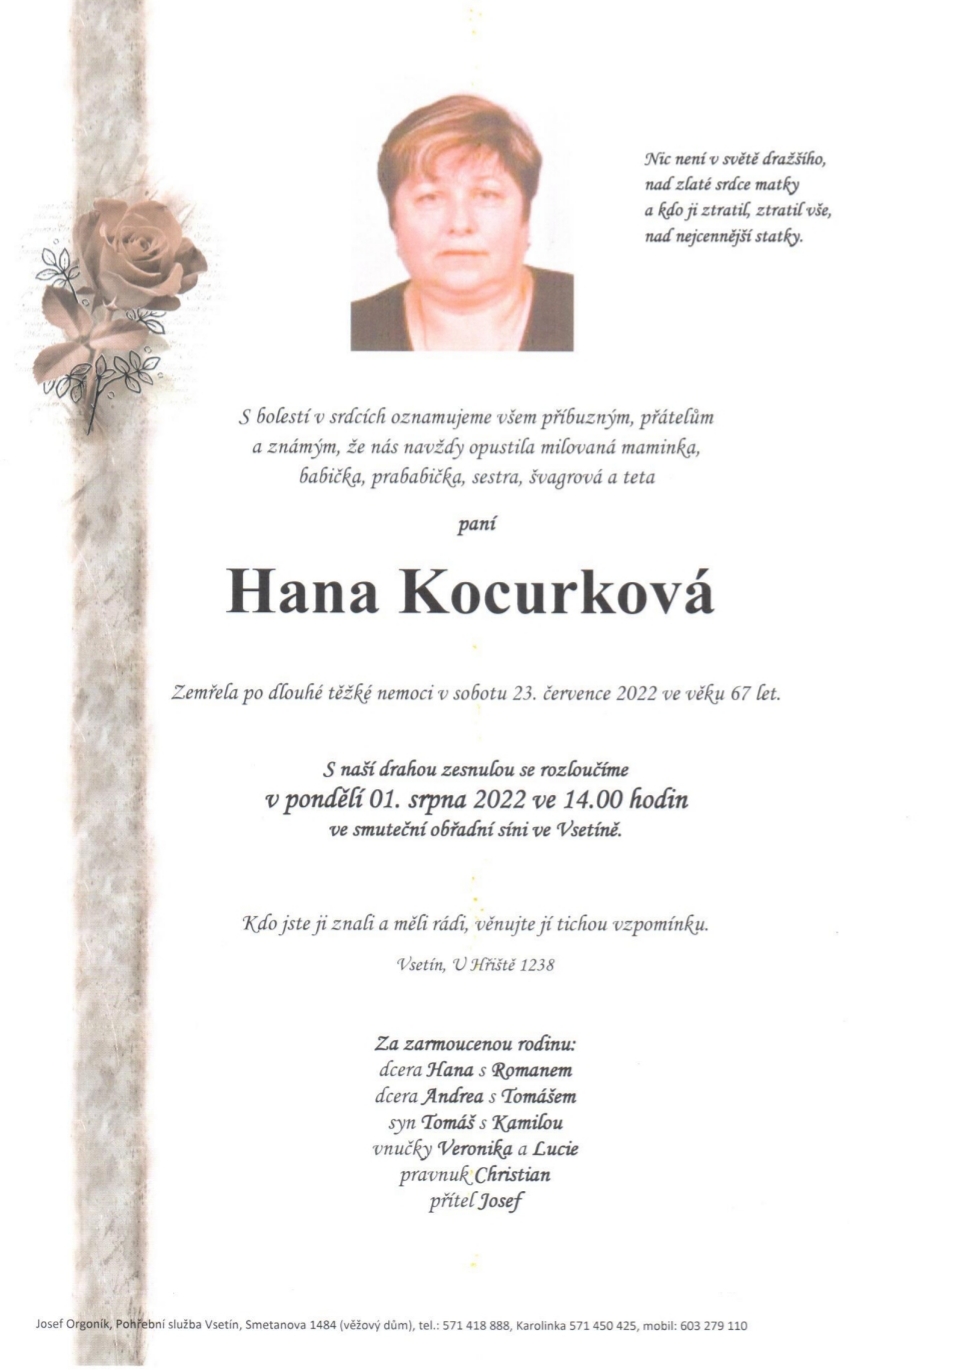 Hana Kocurková